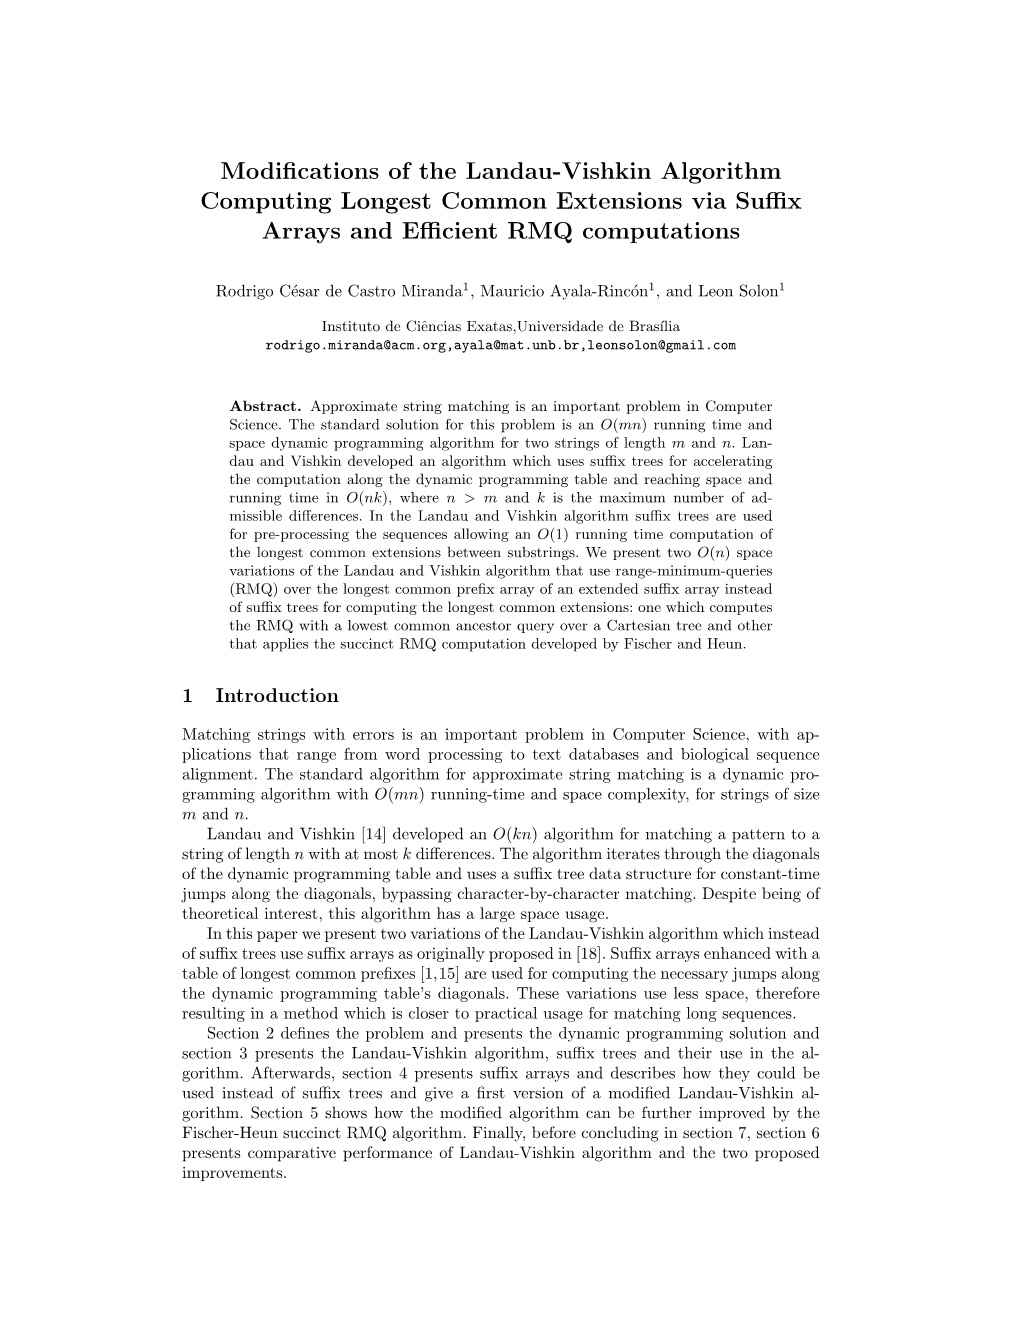 Modifications of the Landau-Vishkin Algorithm Computing Longest